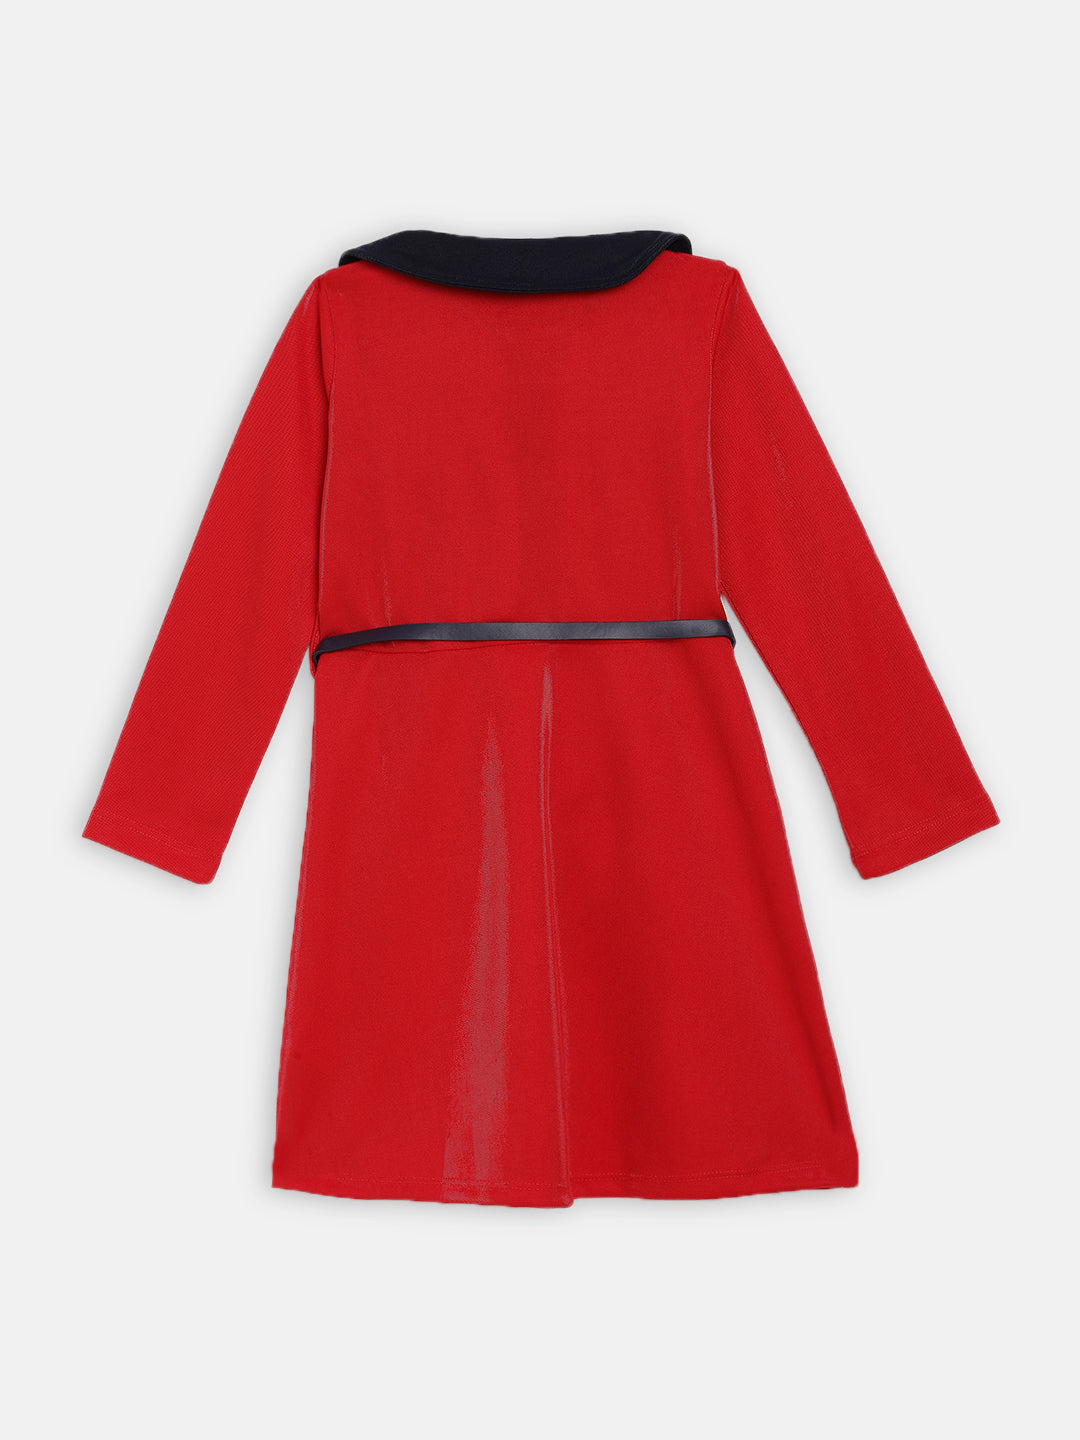 Christmas Girls Winter Warm Red Coat | Girl coat, Warm dresses, Red coat